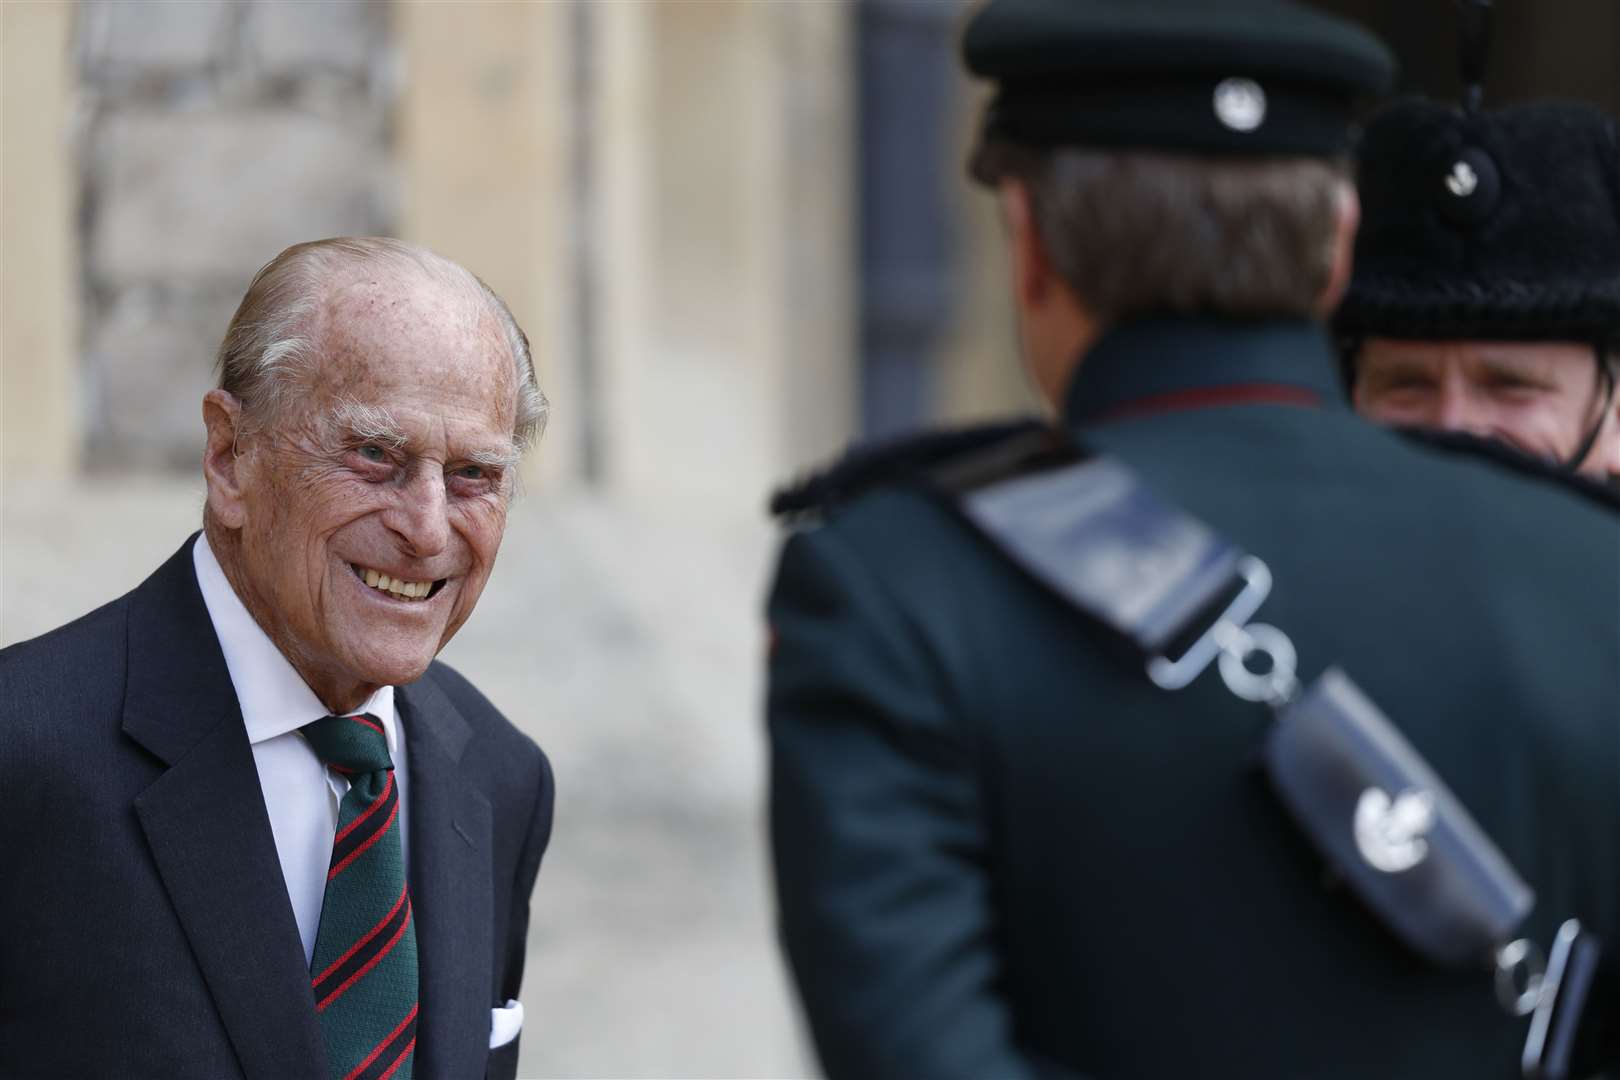 The Duke of Edinburgh at Windsor last July (Adrian Dennis/PA)